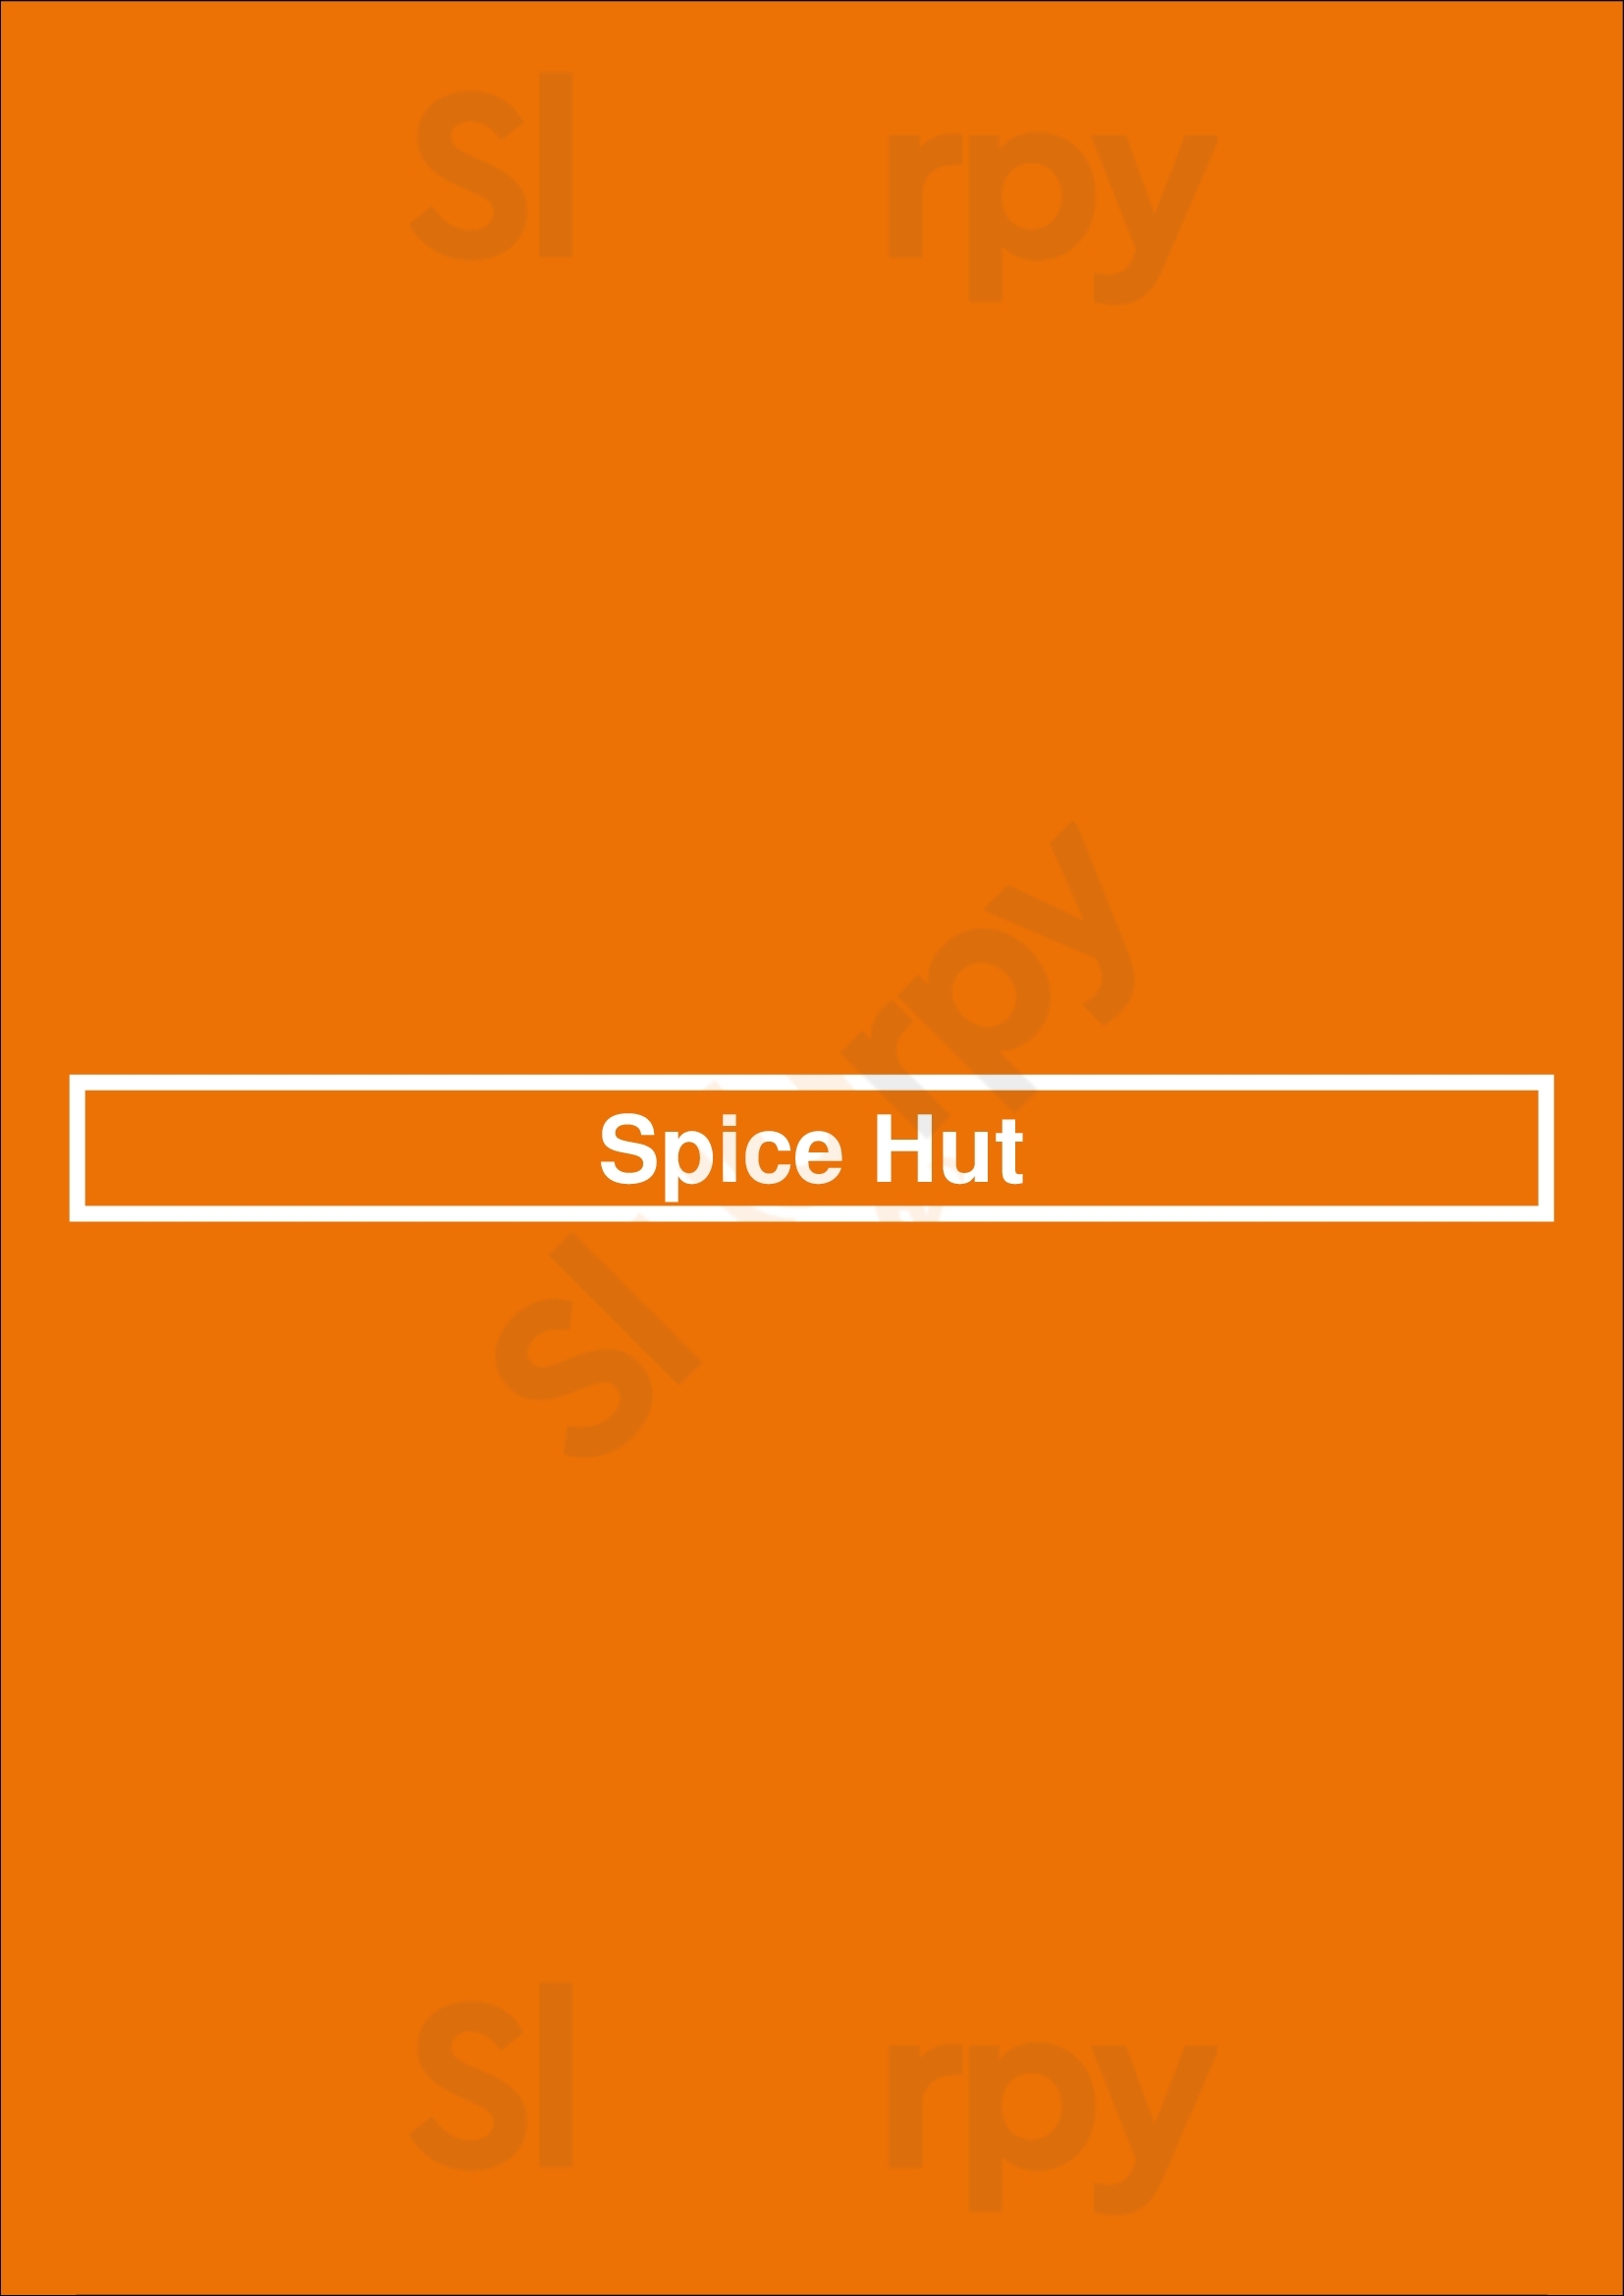 Spice Hut New York City Menu - 1